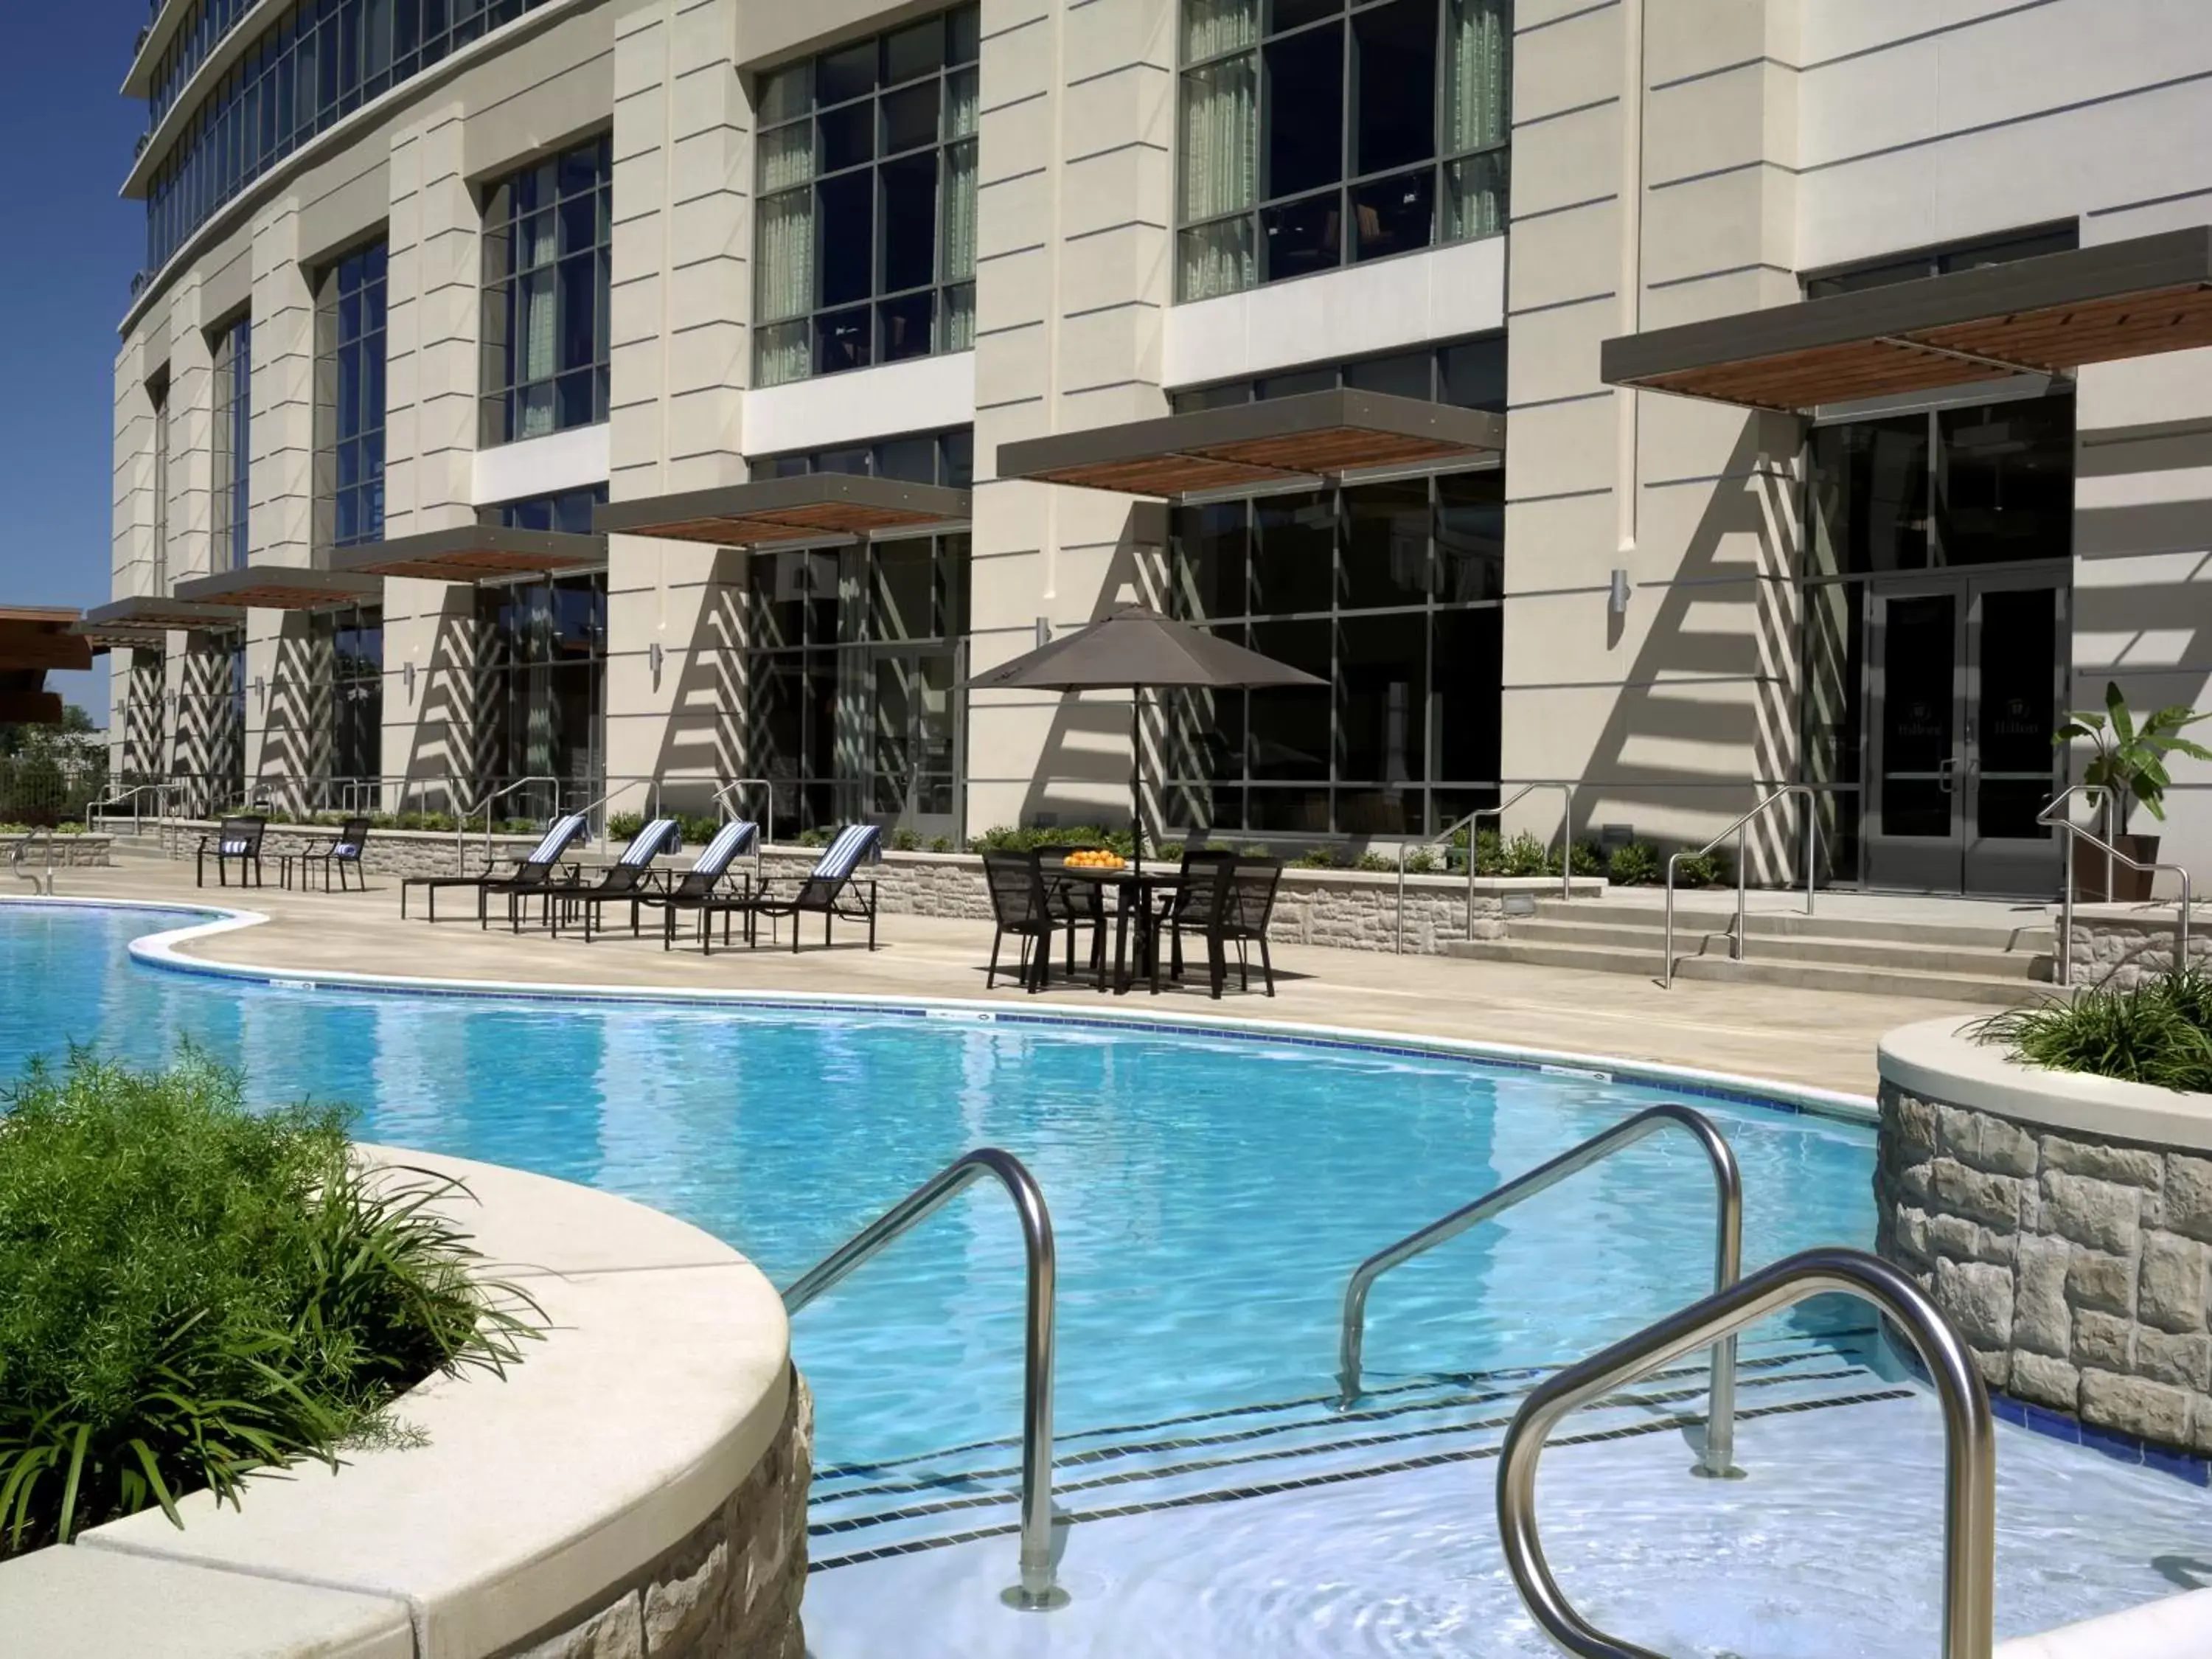 Swimming Pool in Hilton Branson Convention Center